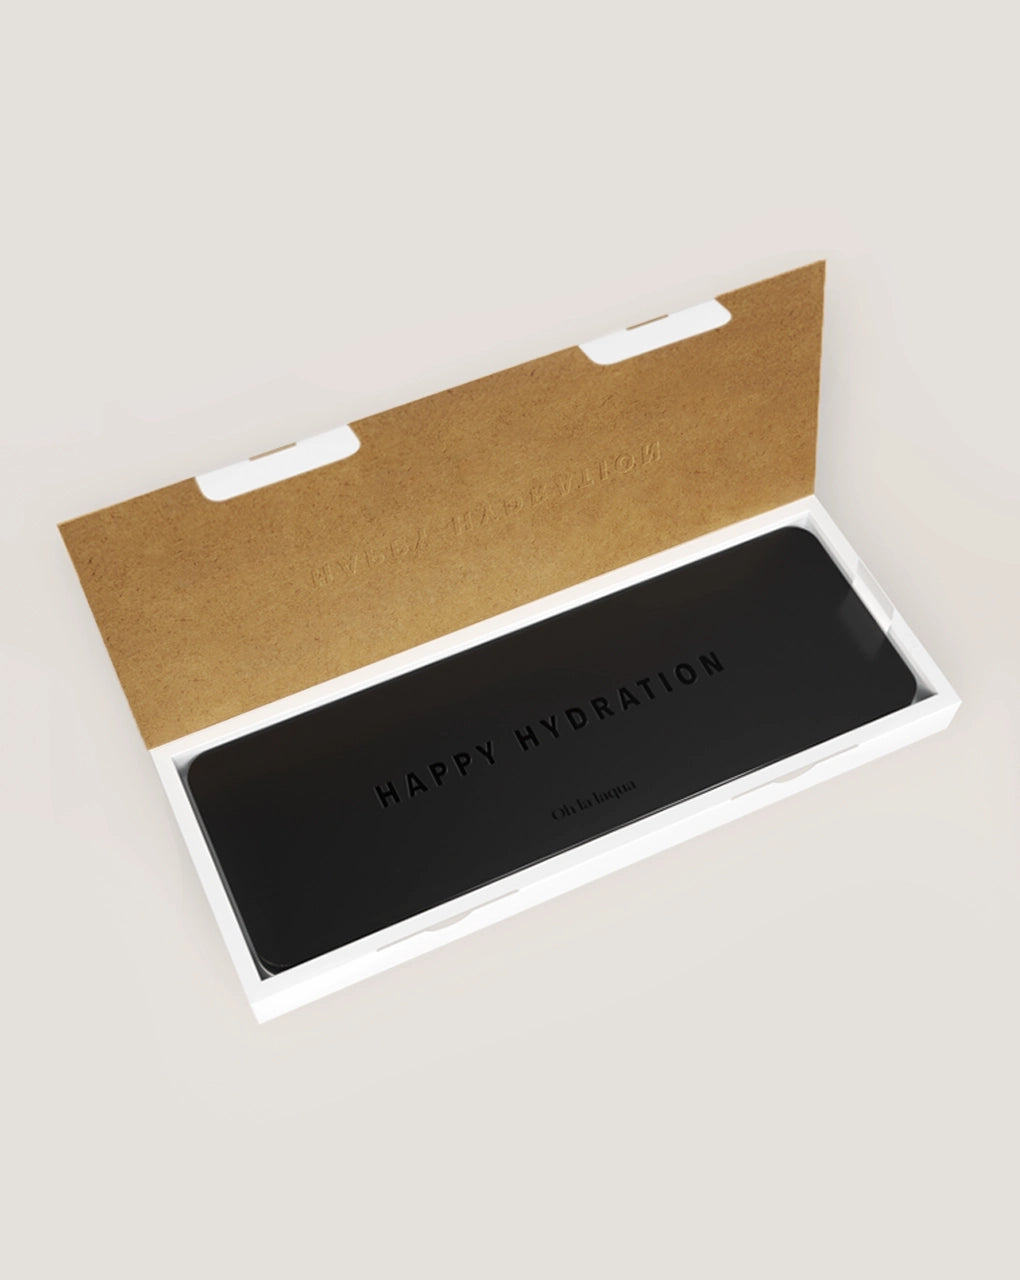 OH LA LAQUA Meet & Greet Box - packaging opened